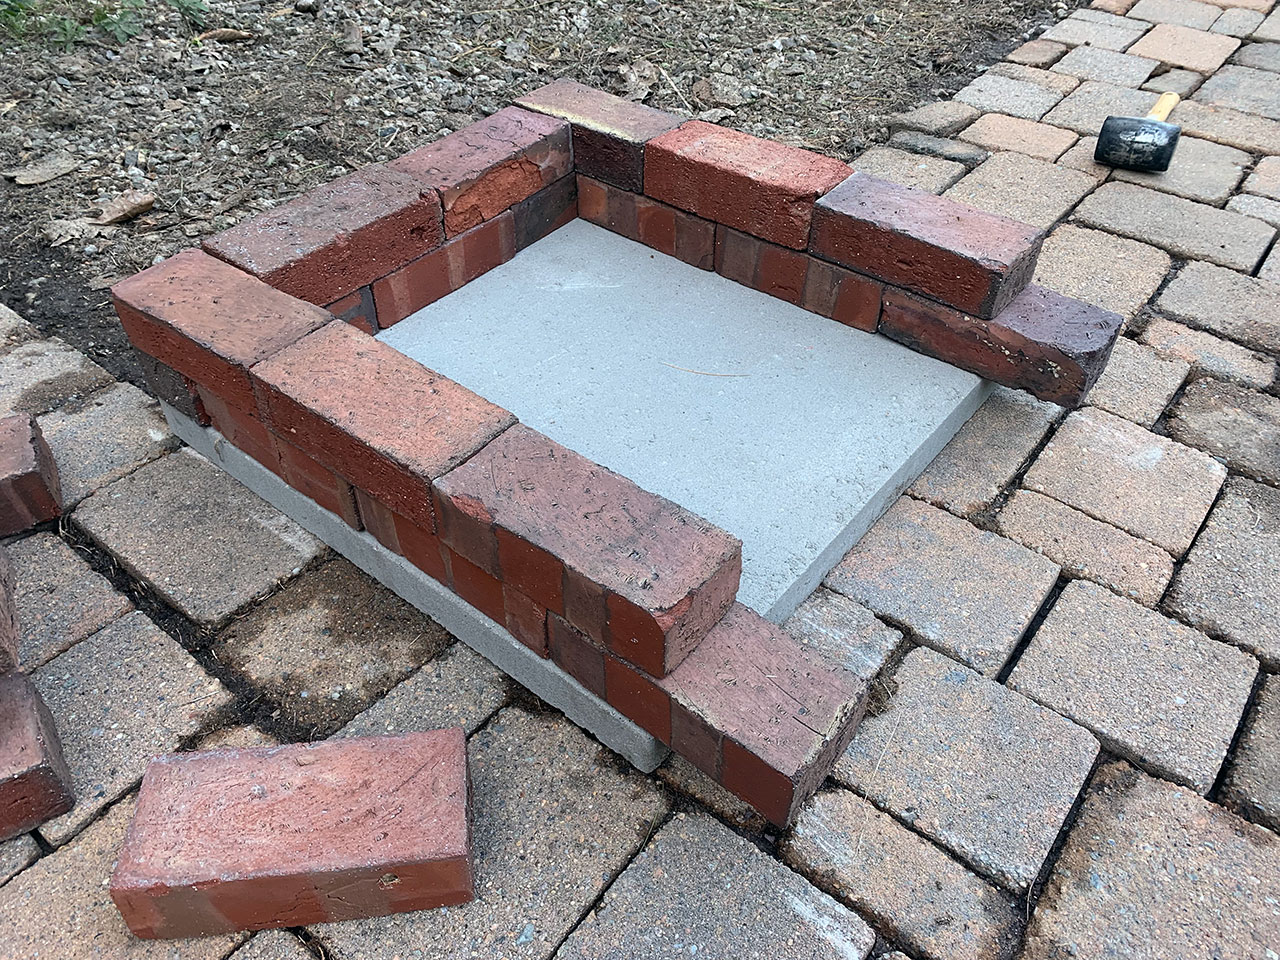 Second layer of bricks